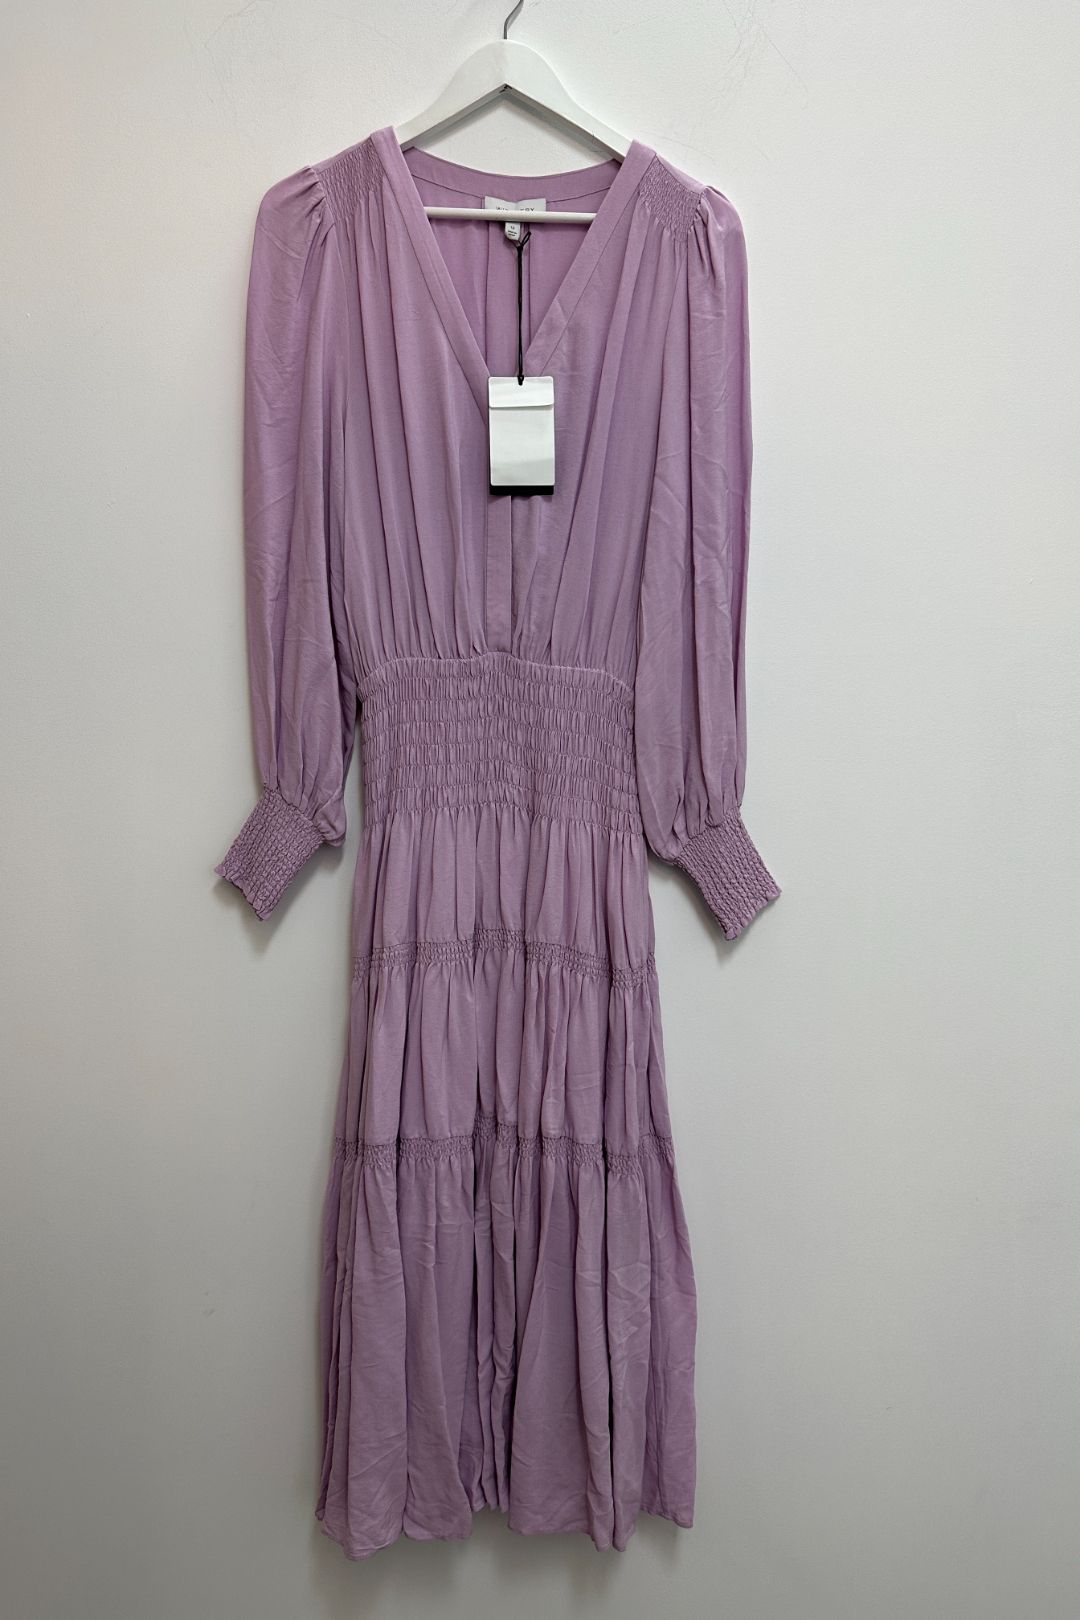 Whirred Shirt Dress in Light Purple 